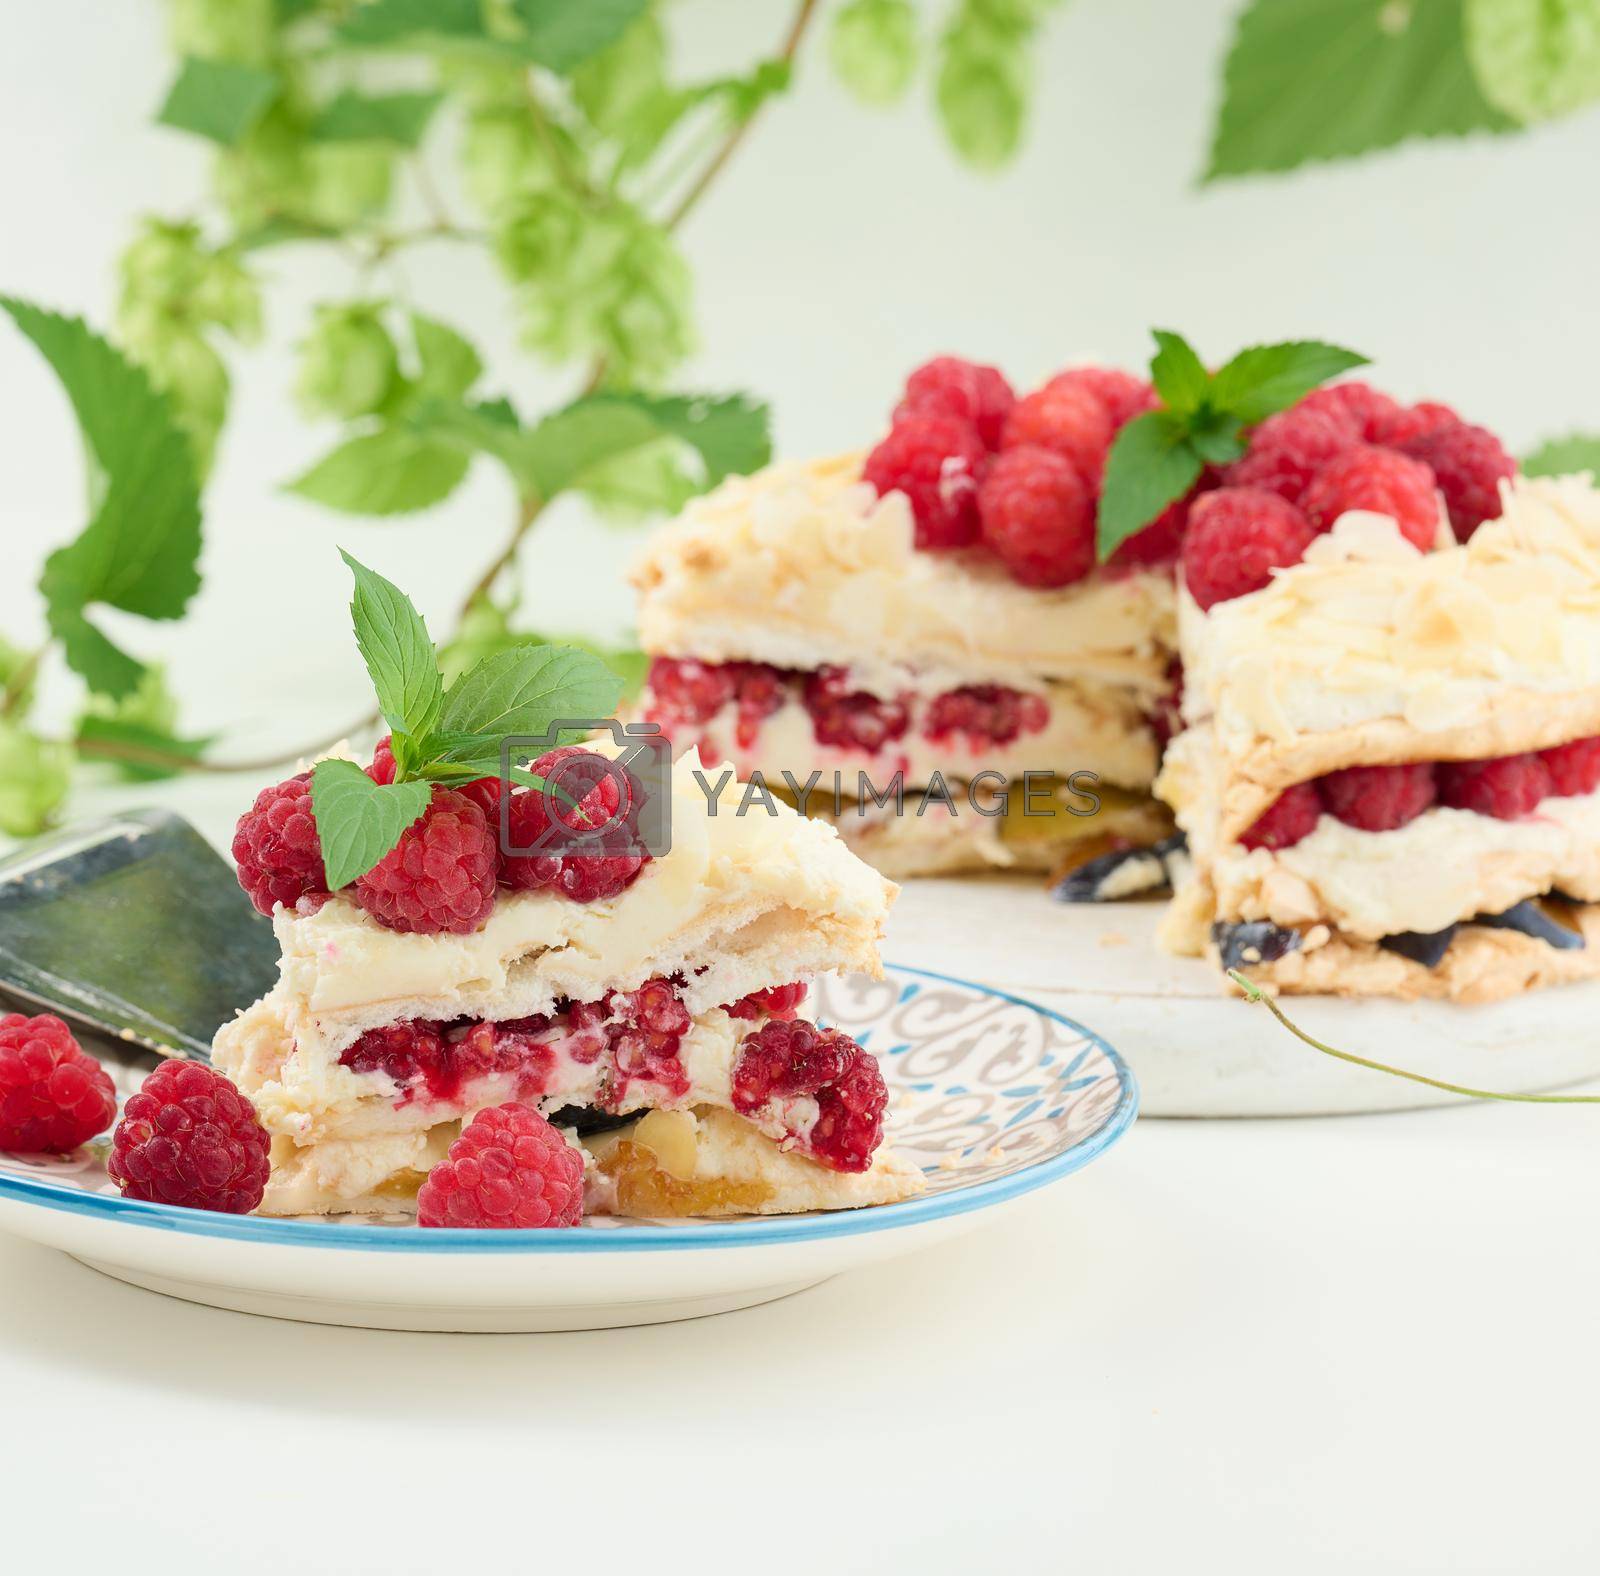 Royalty free image of Round meringue pie with fresh raspberries on a white background, Pavlova dessert by ndanko